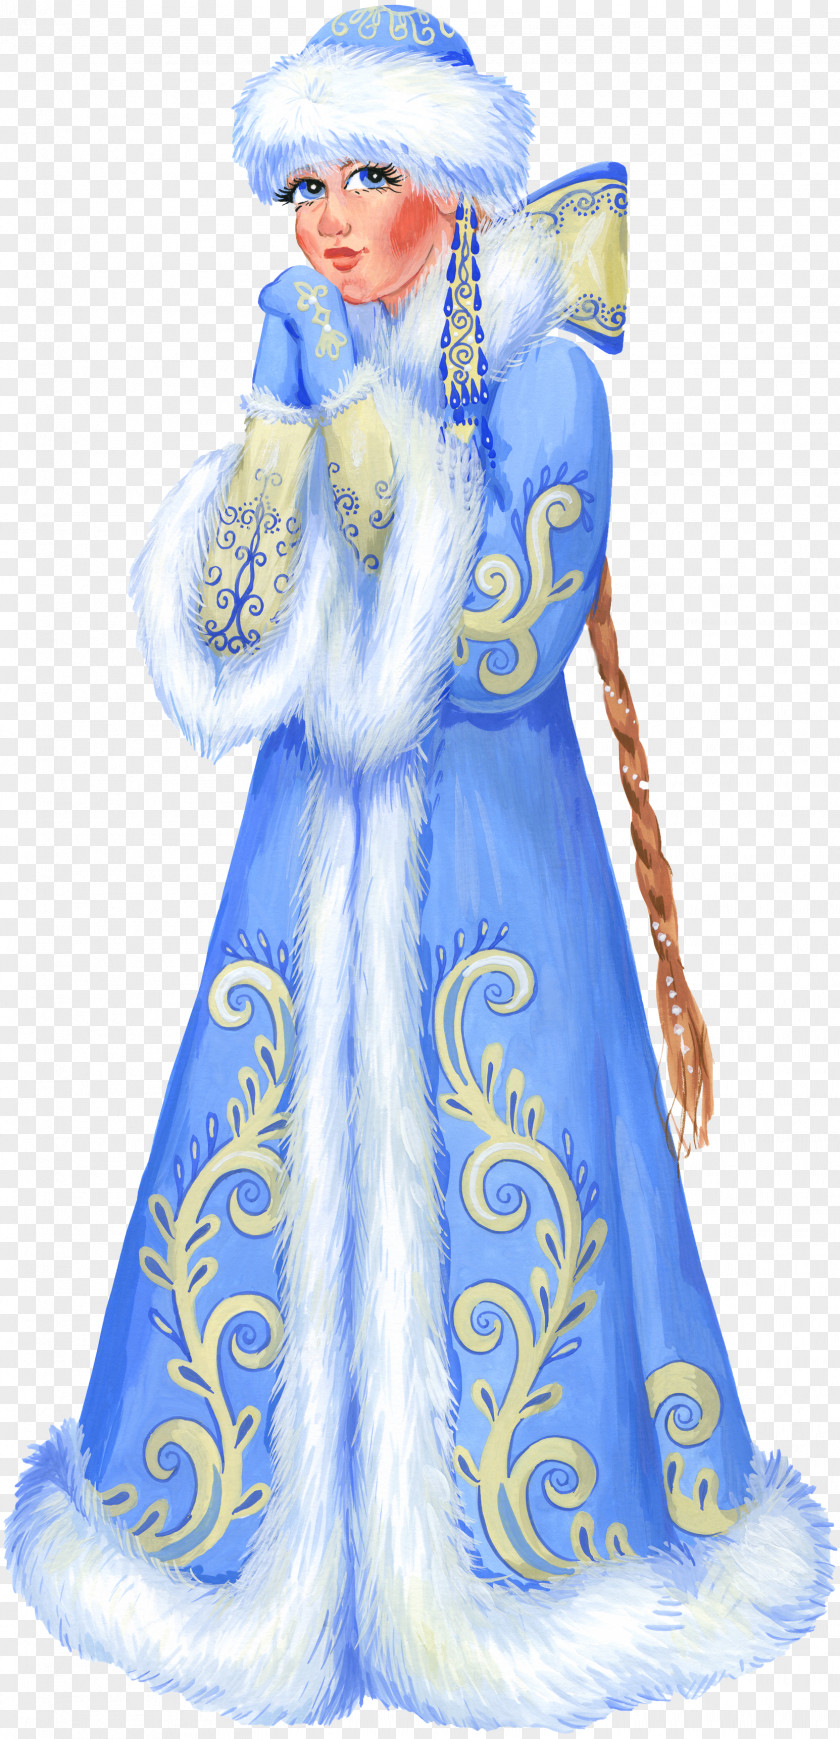 Snow White Snegurochka Ded Moroz The Maiden Child PNG